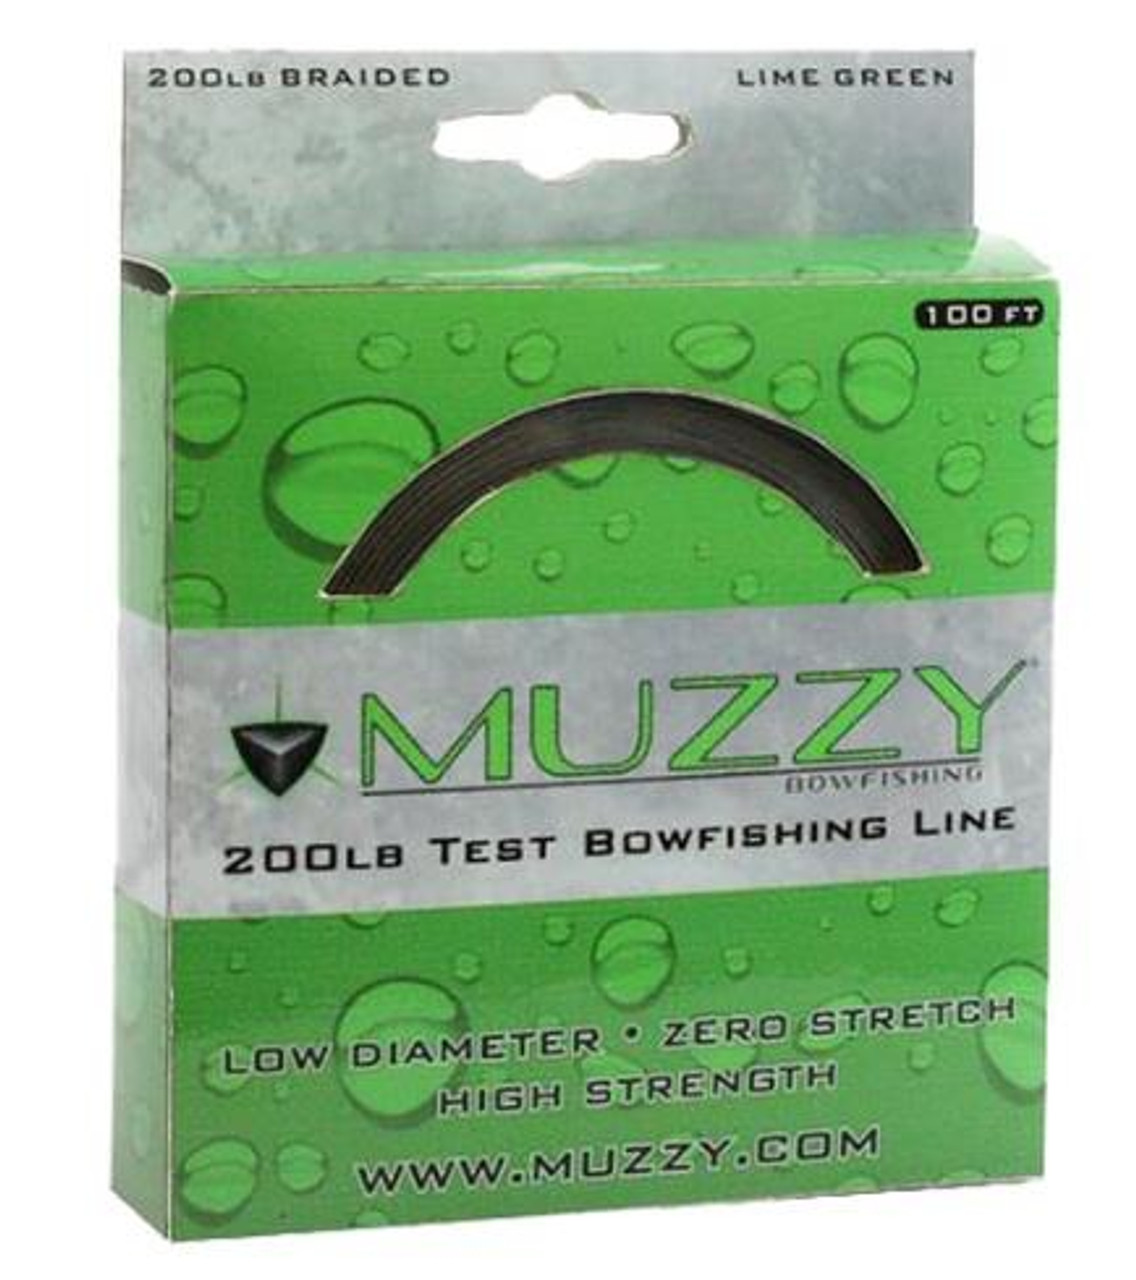 Muzzy Bowfishing Tournament Reel